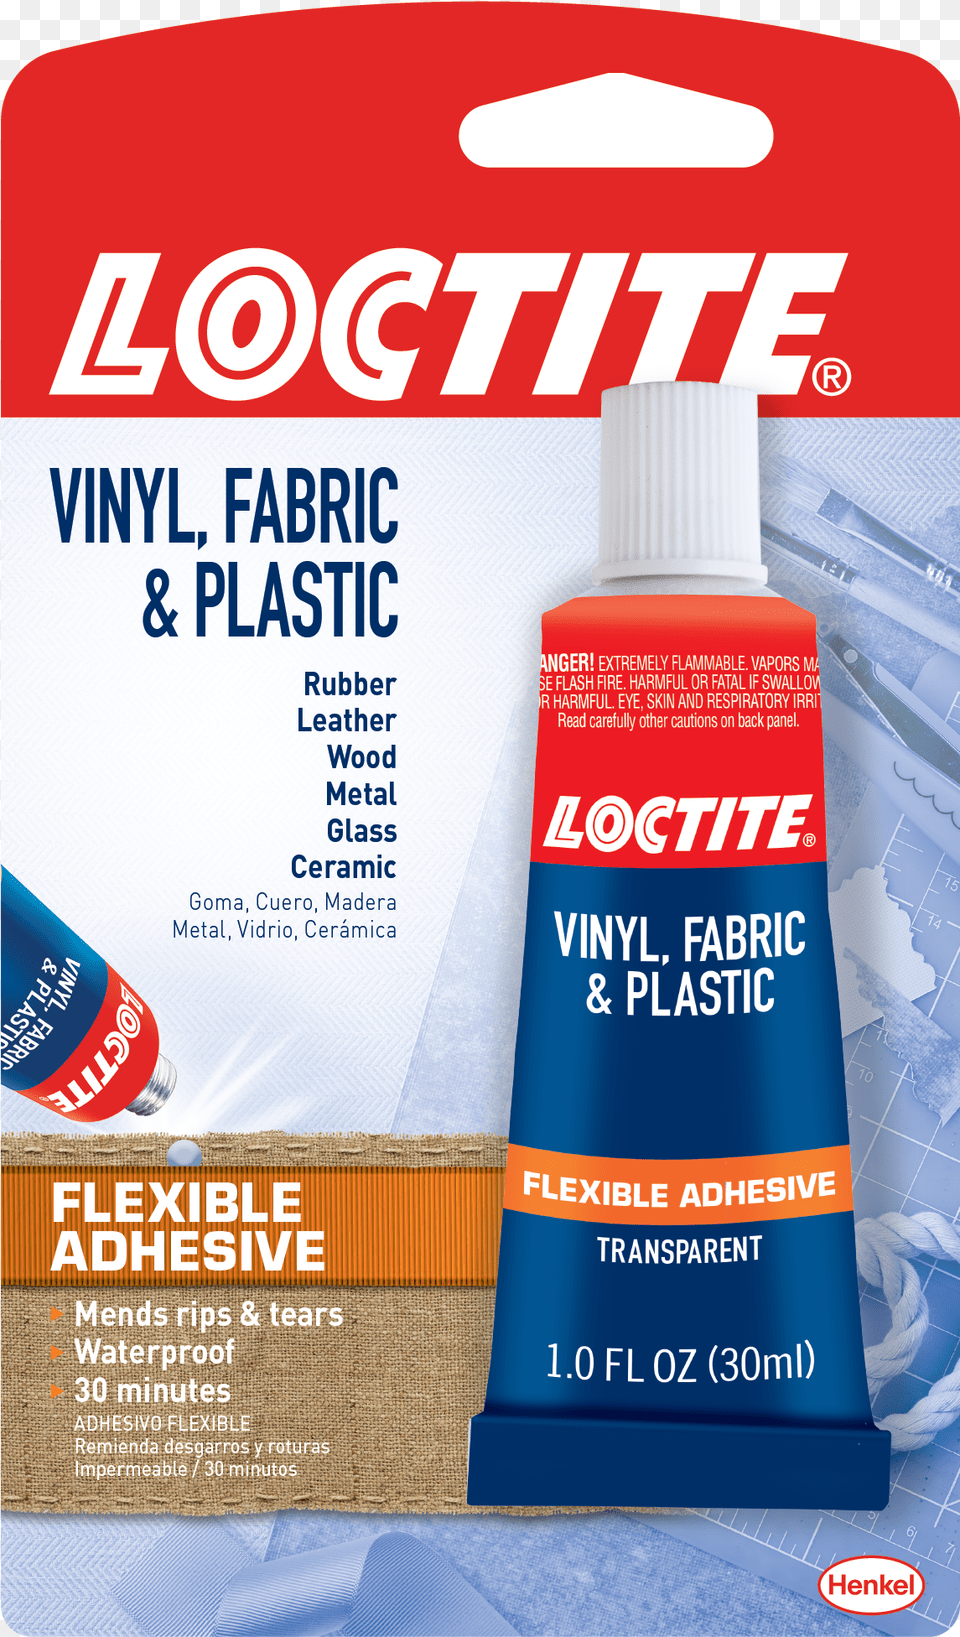 Loctite Vinyl Fabric Amp Plastic Flexible Adhesive, Advertisement, Poster, Bottle, Dynamite Png